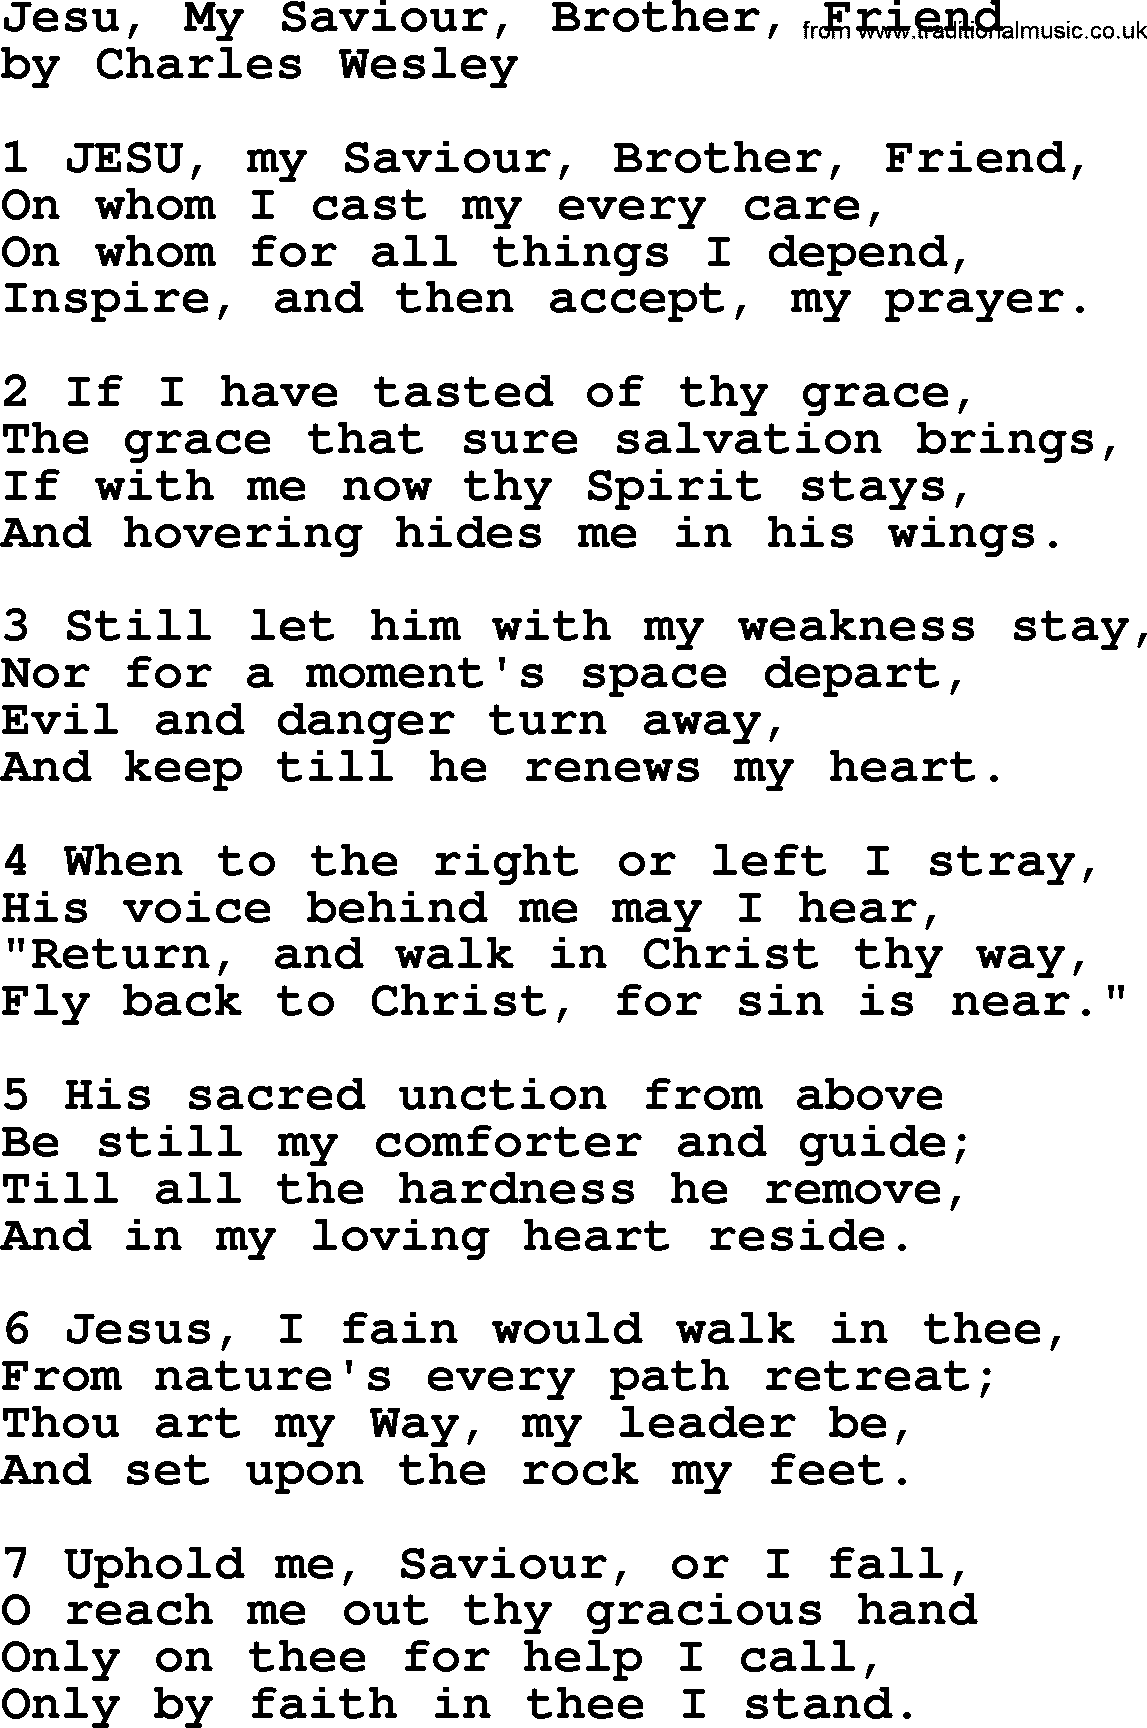 Charles Wesley hymn: Jesu, My Saviour, Brother, Friend, lyrics